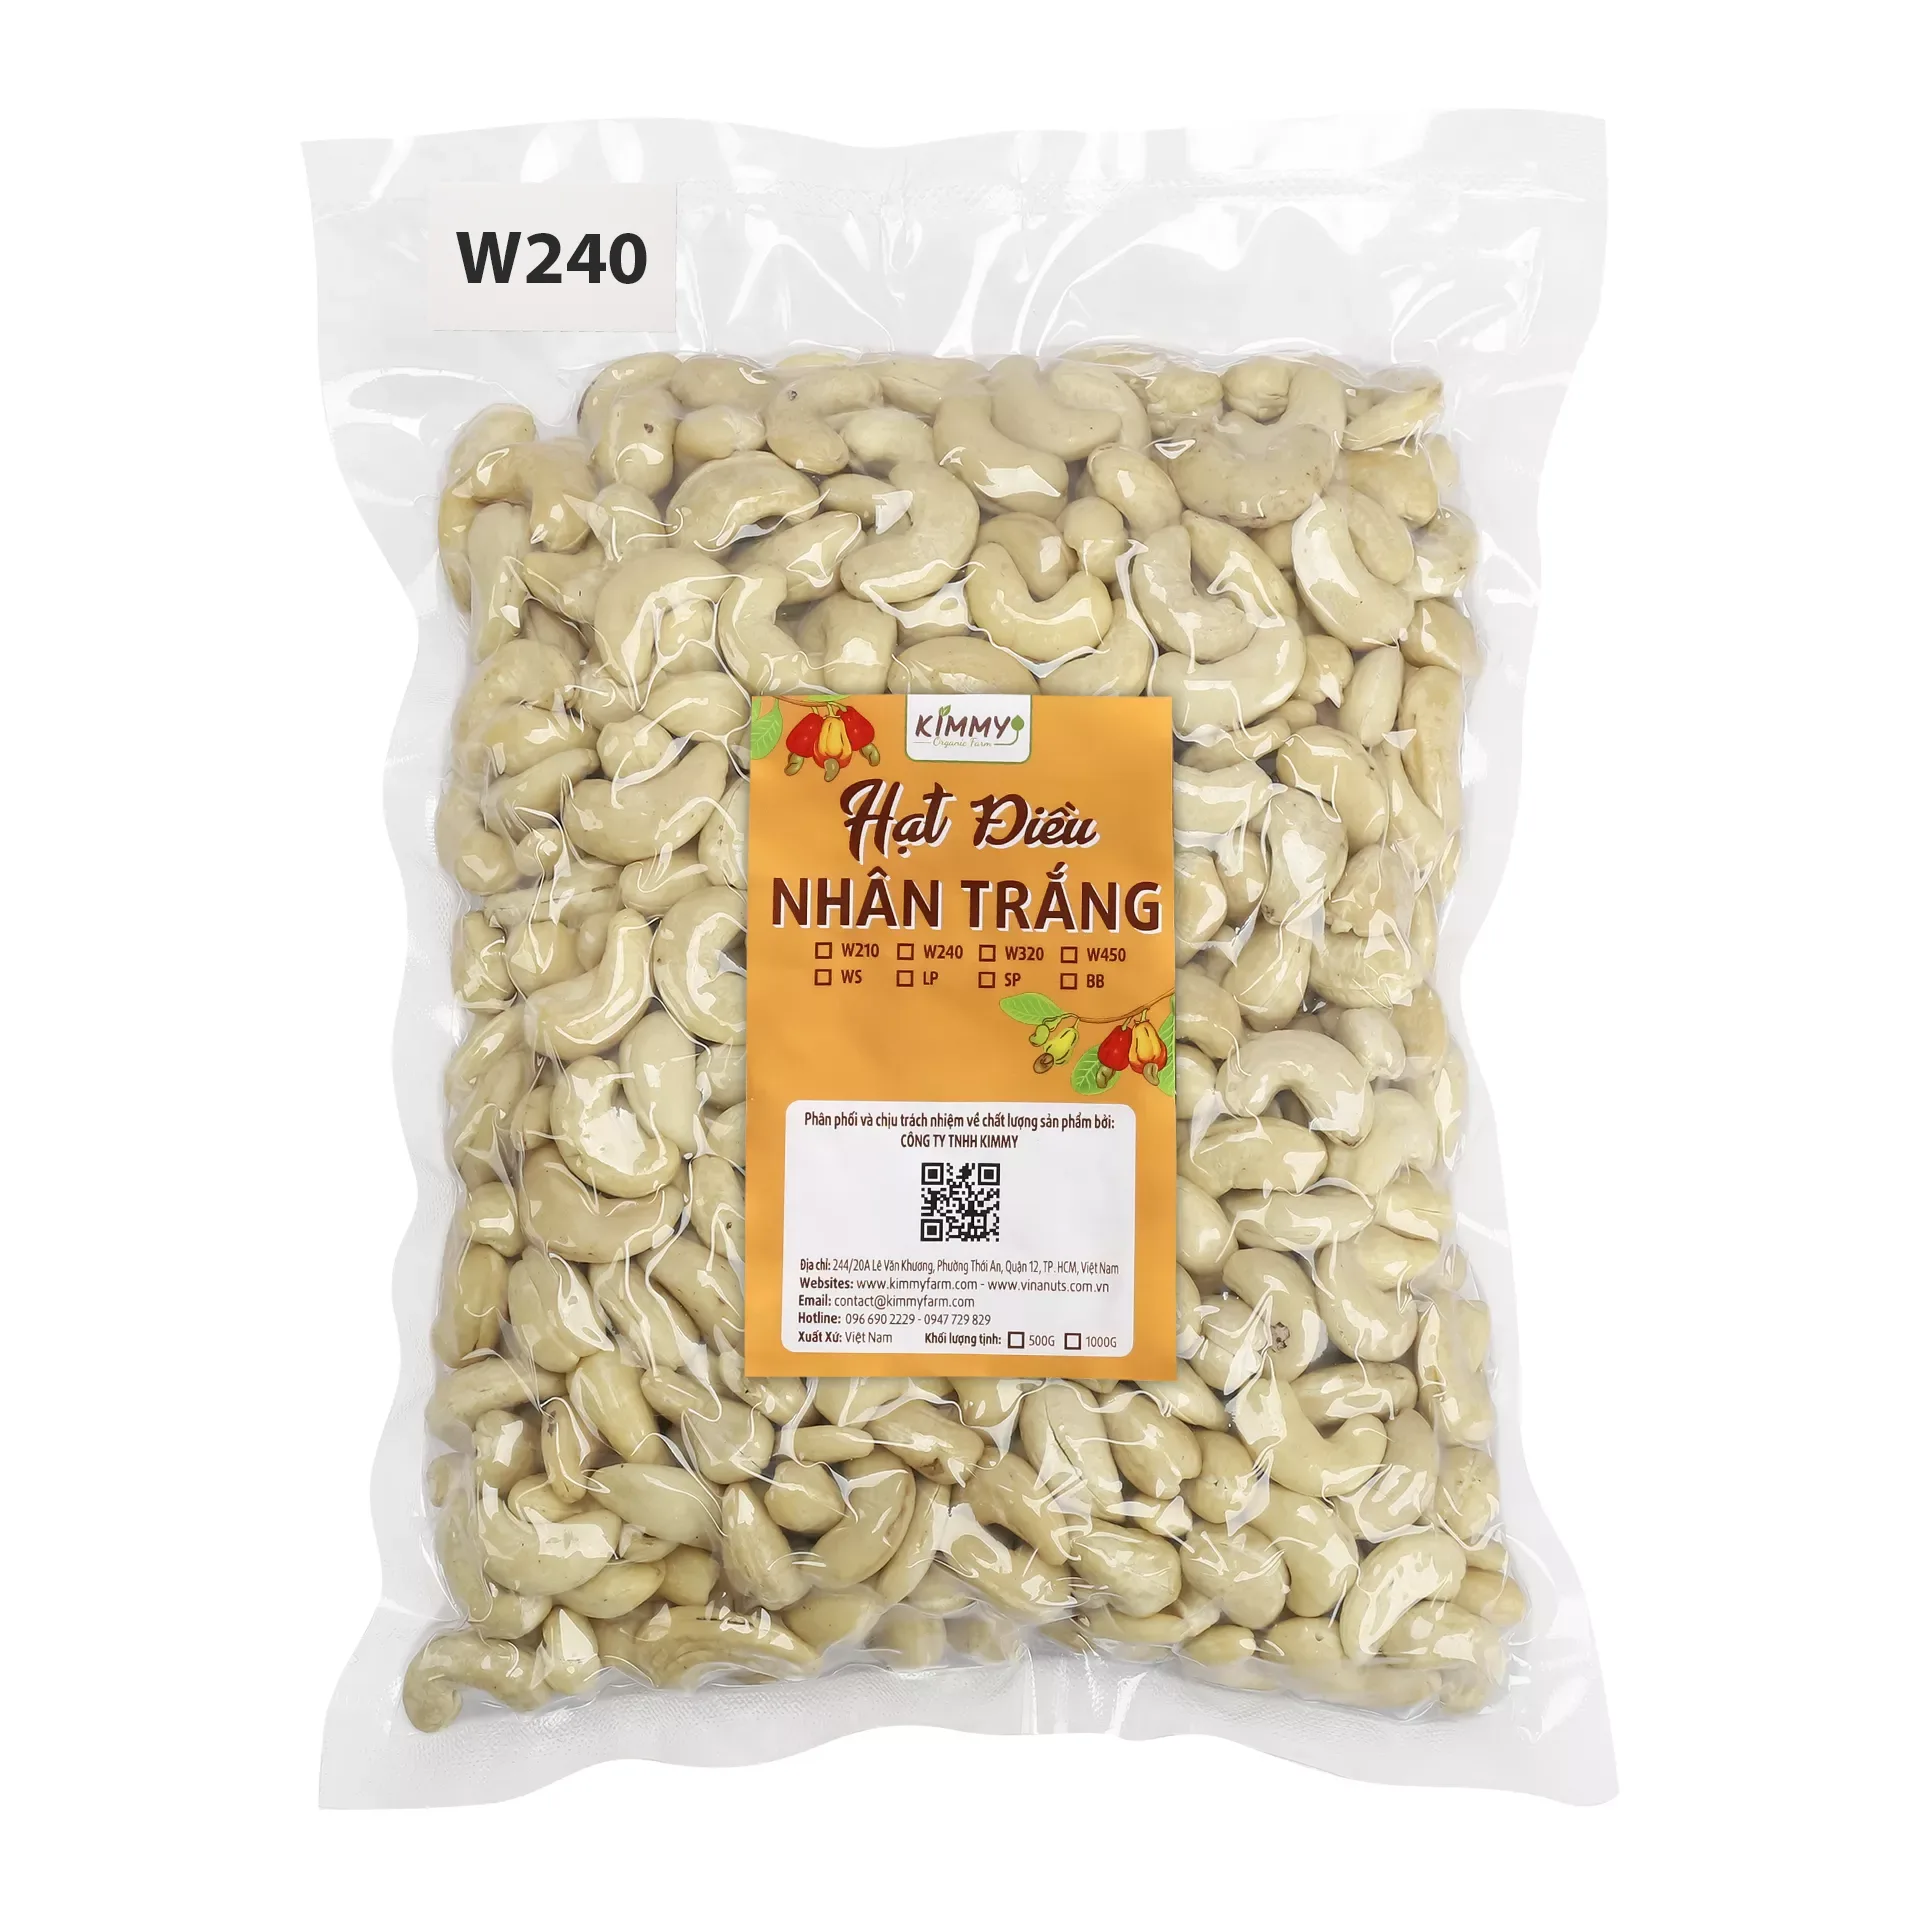 W240 Cashew Nuts With 1st Quality In Vietnam - Packed 1KG Vaccum Bag -Kimmy Farm Vietnam